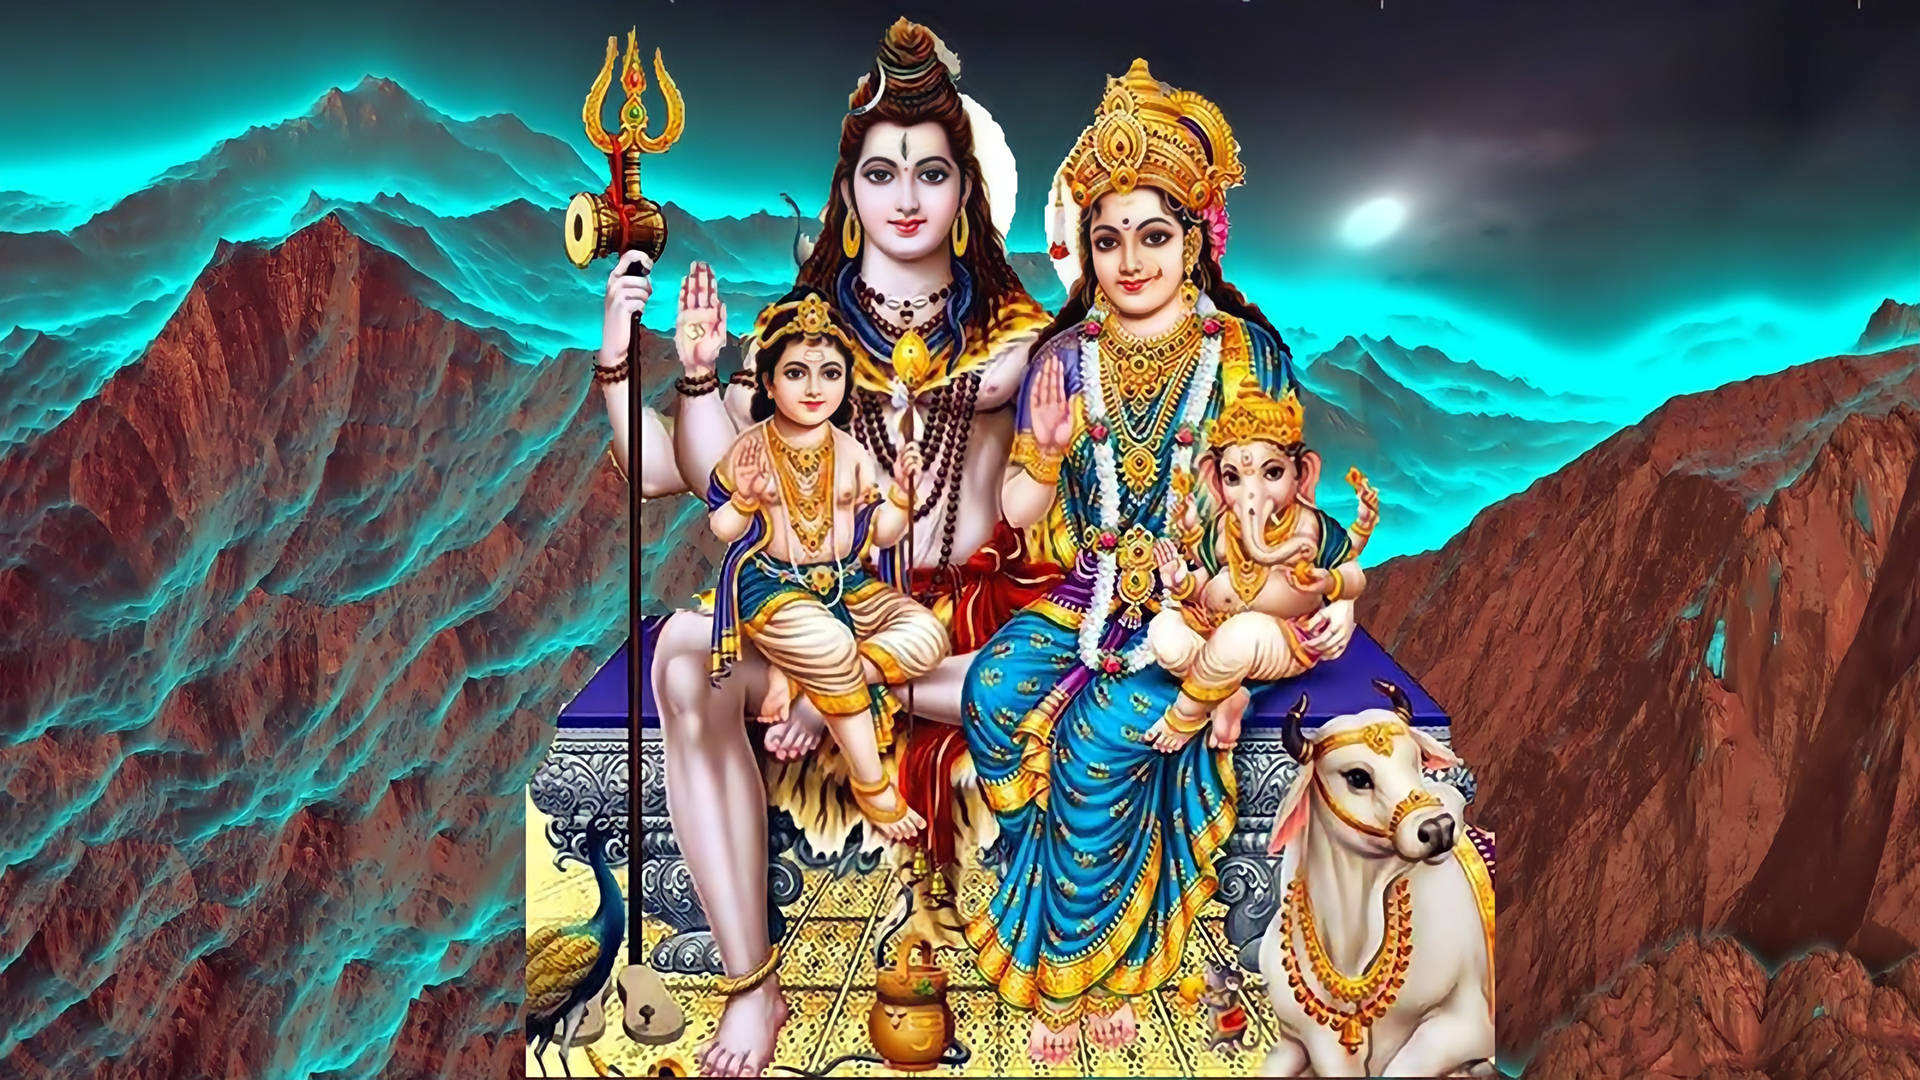 Free Shiva Parvati Wallpaper Downloads, [100+] Shiva Parvati Wallpapers for  FREE 